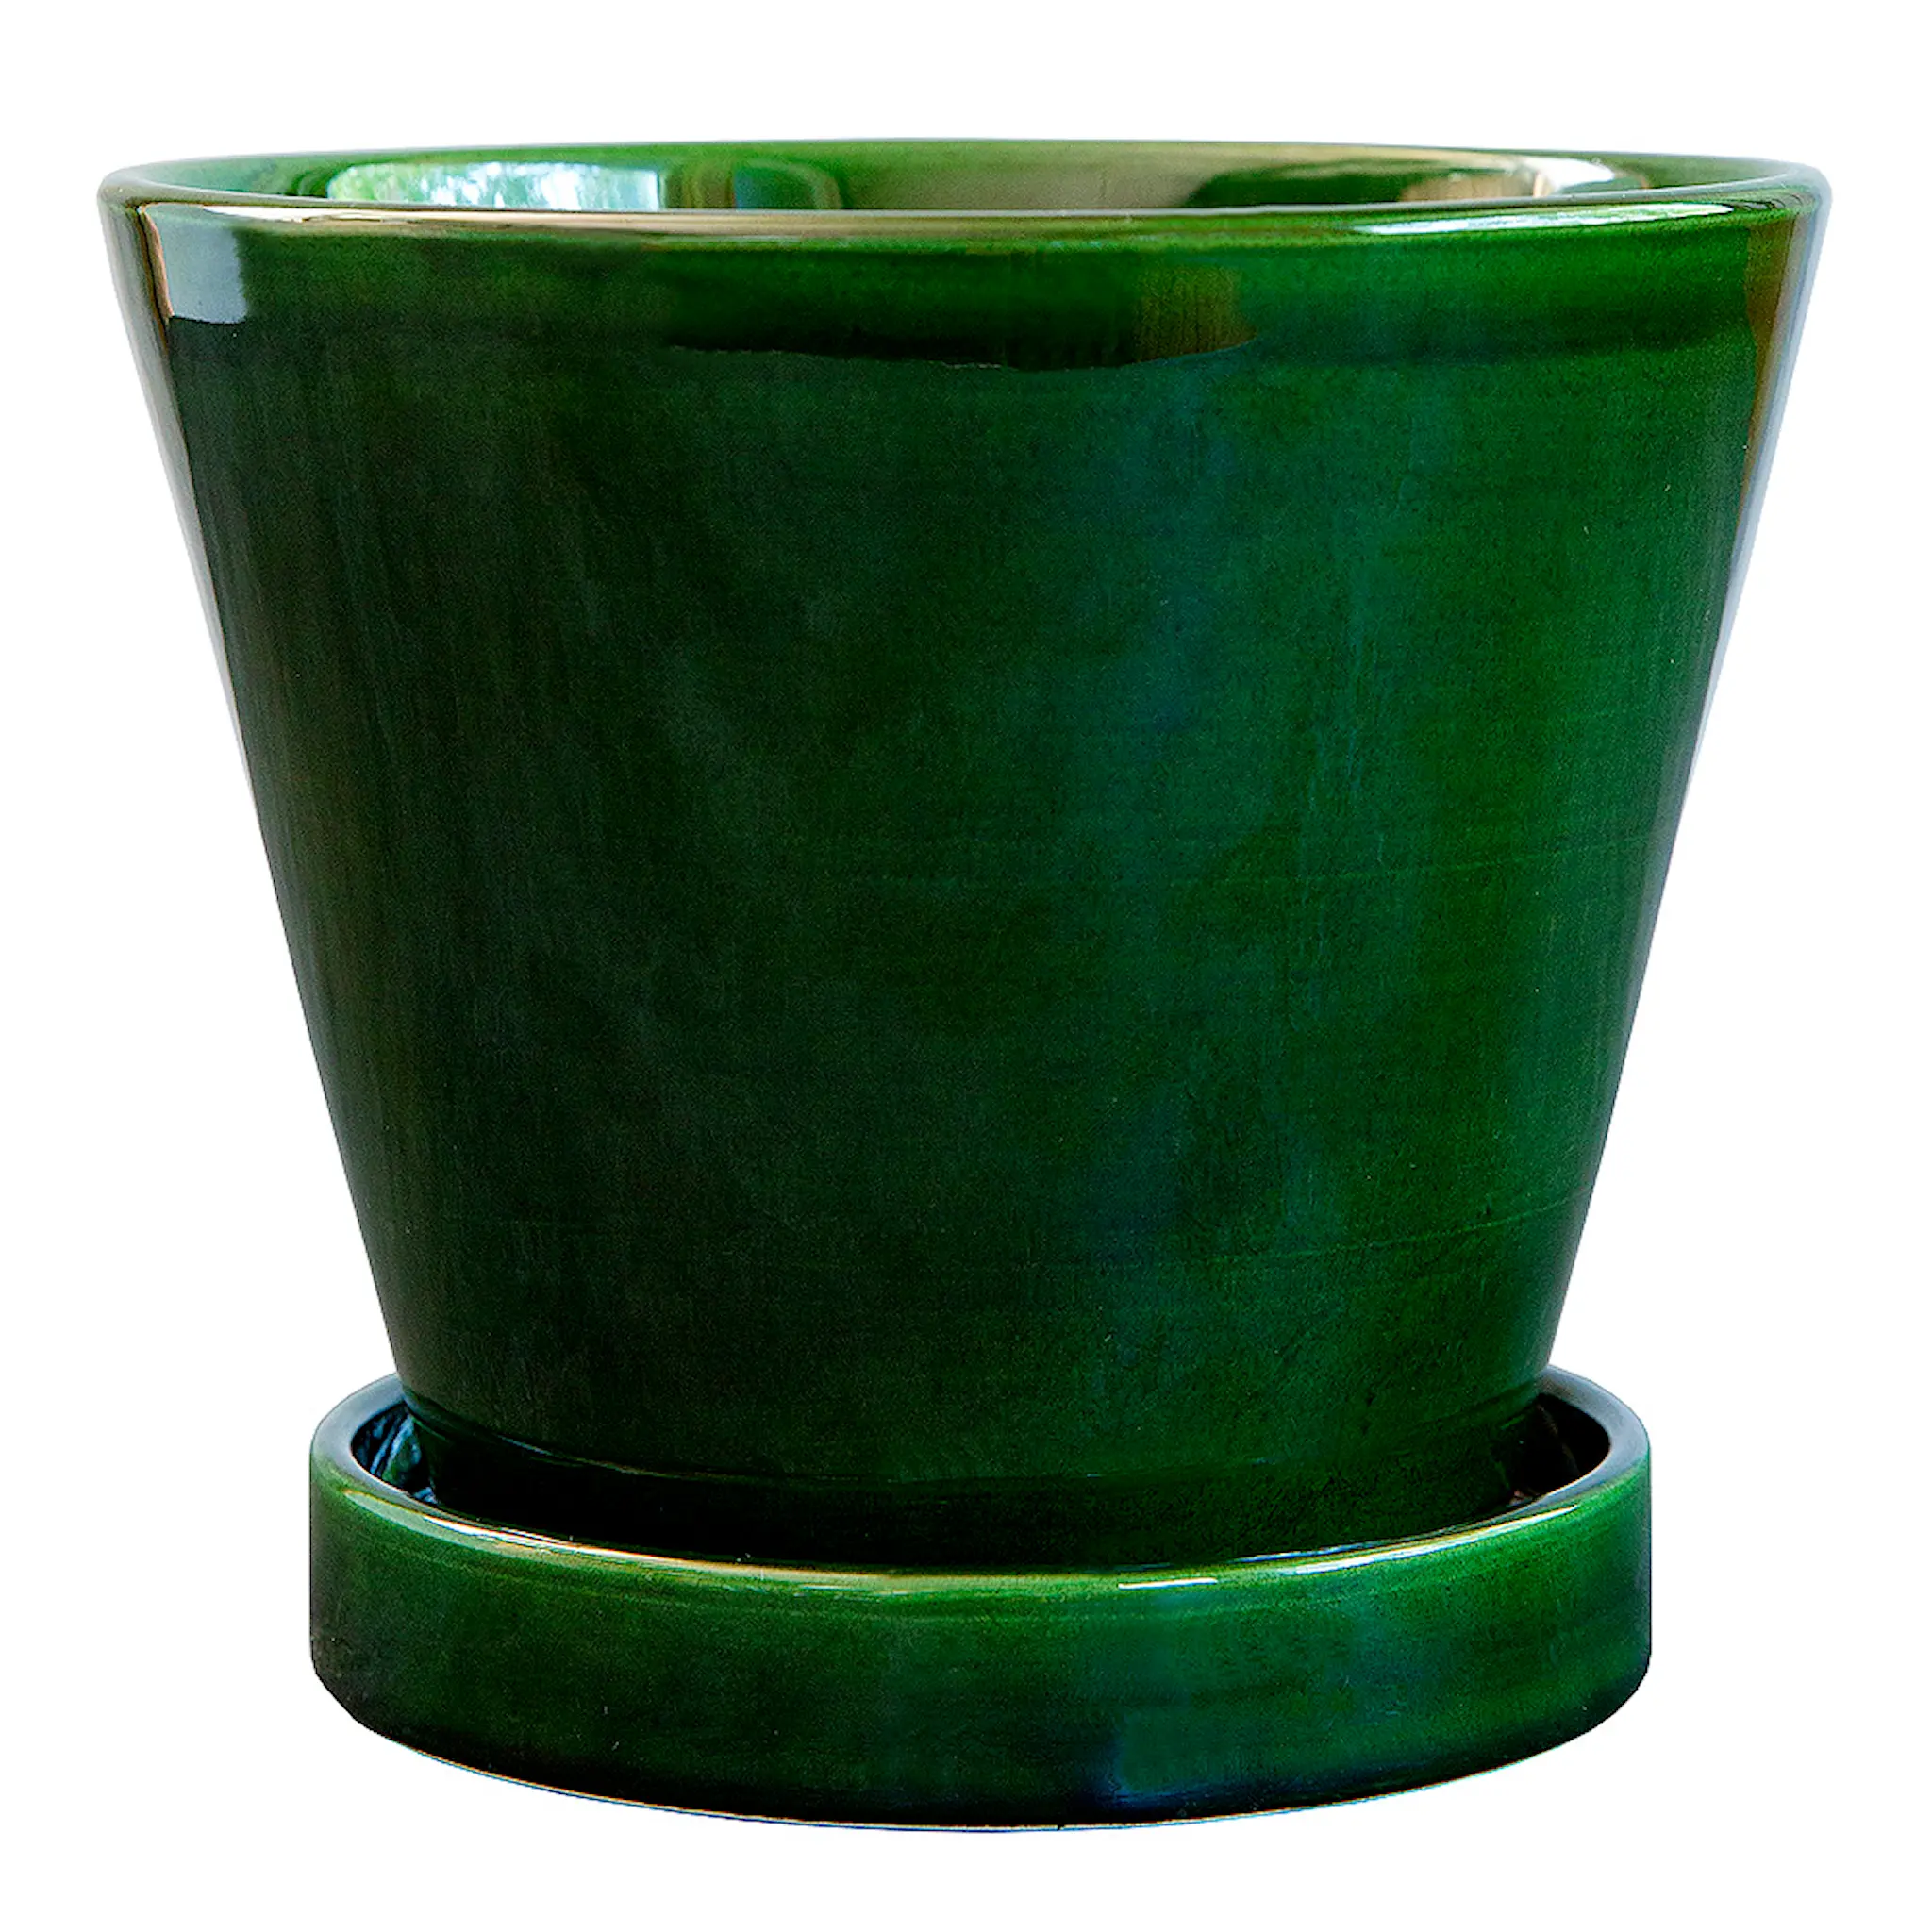 Bergs Potter Julie krukke/fat 15 cm grønn emerald